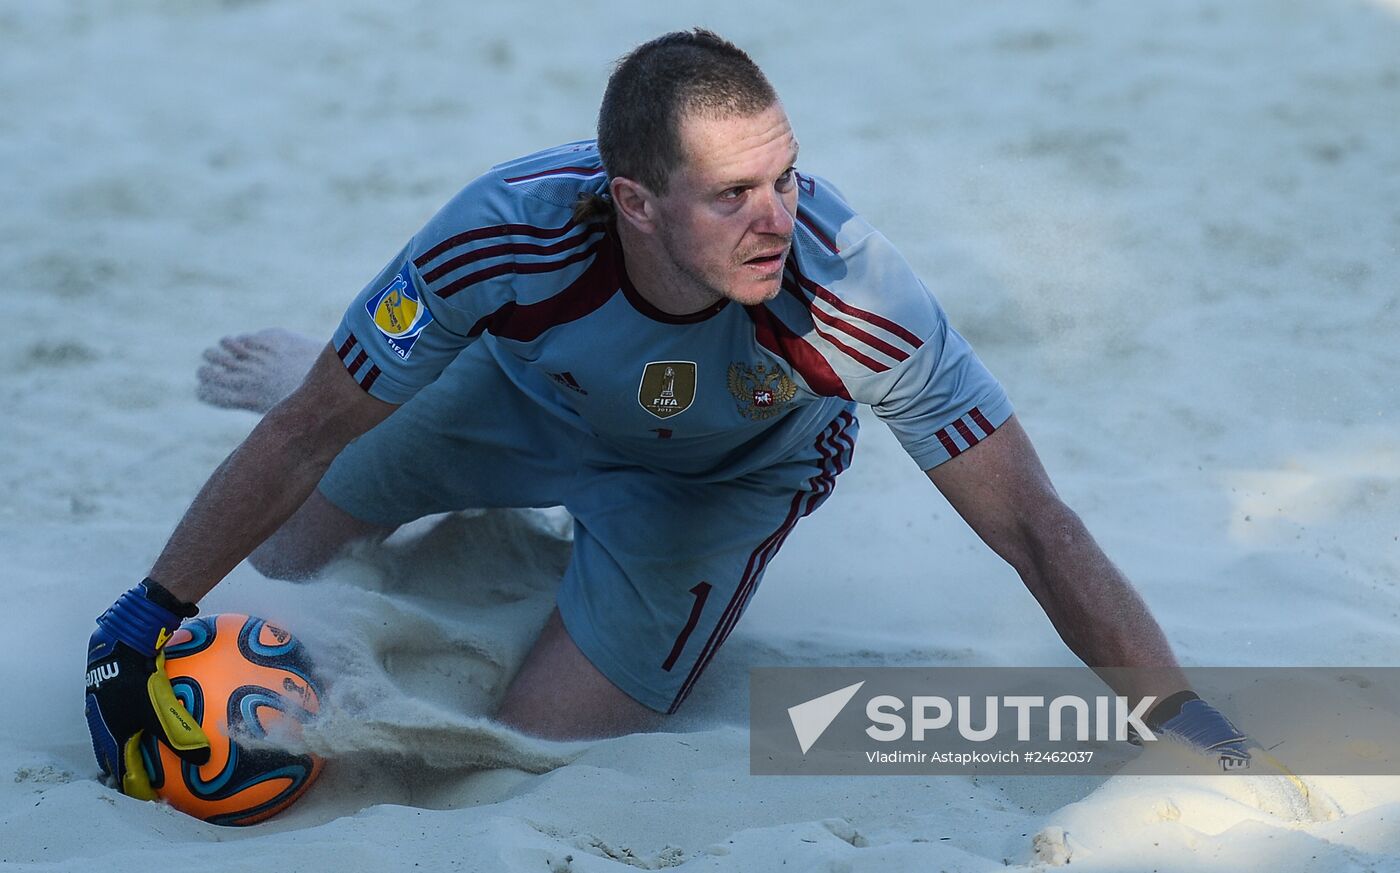 Beach soccer. Euroleague stage. Russia vs. Spain